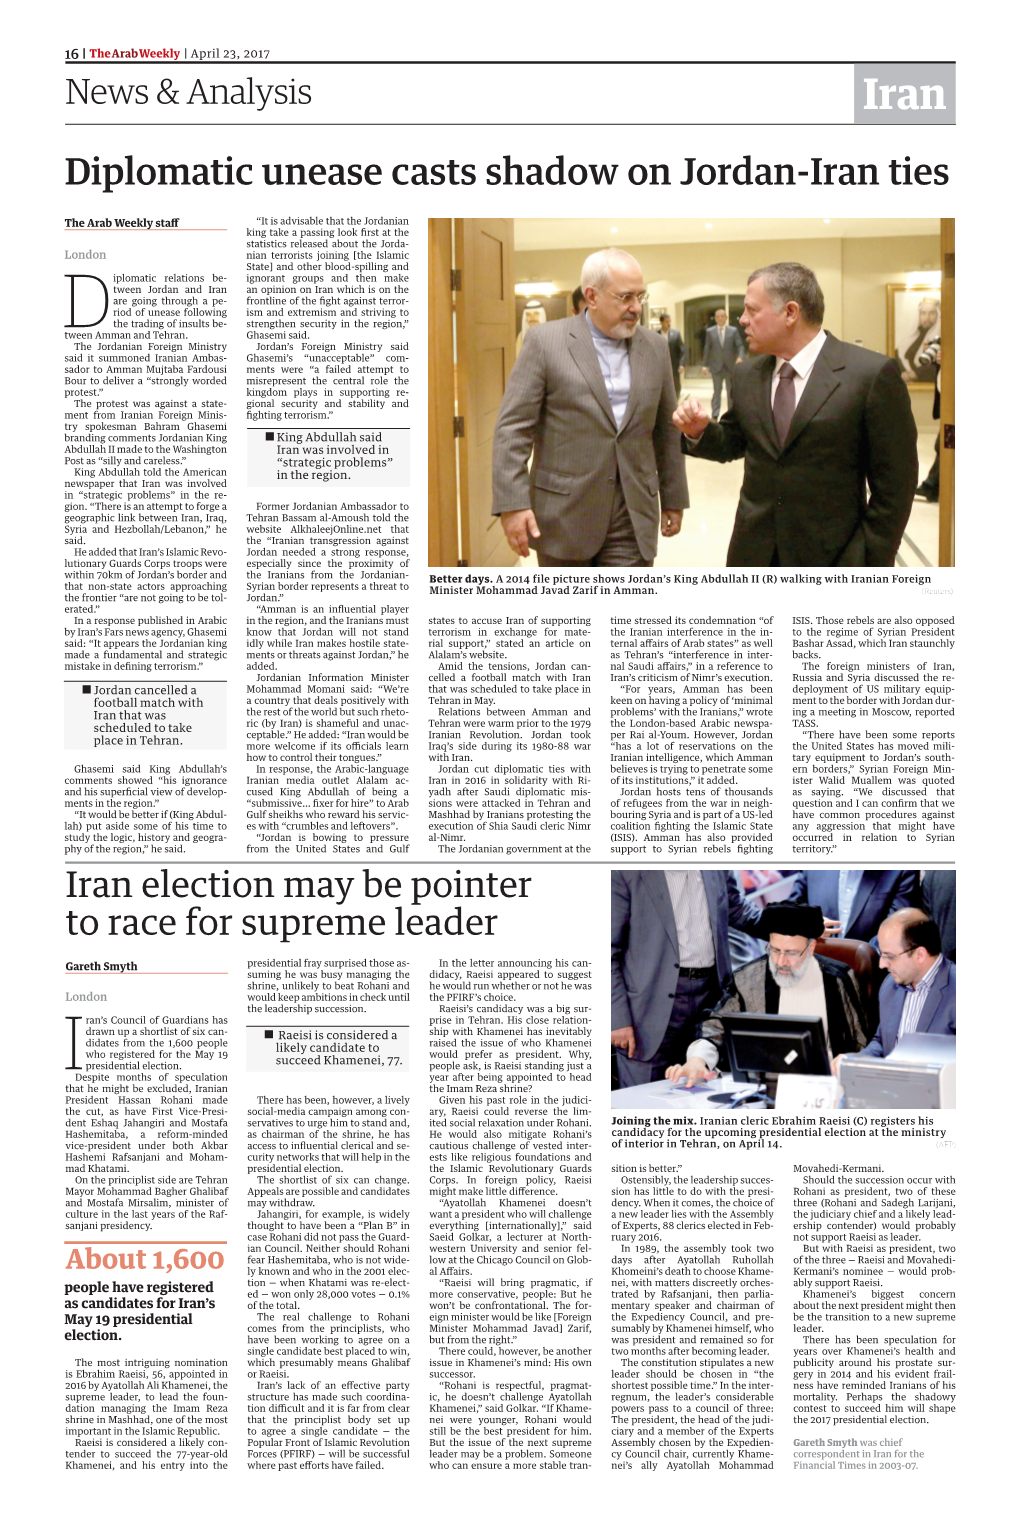 Diplomatic Unease Casts Shadow on Jordan-Iran Ties